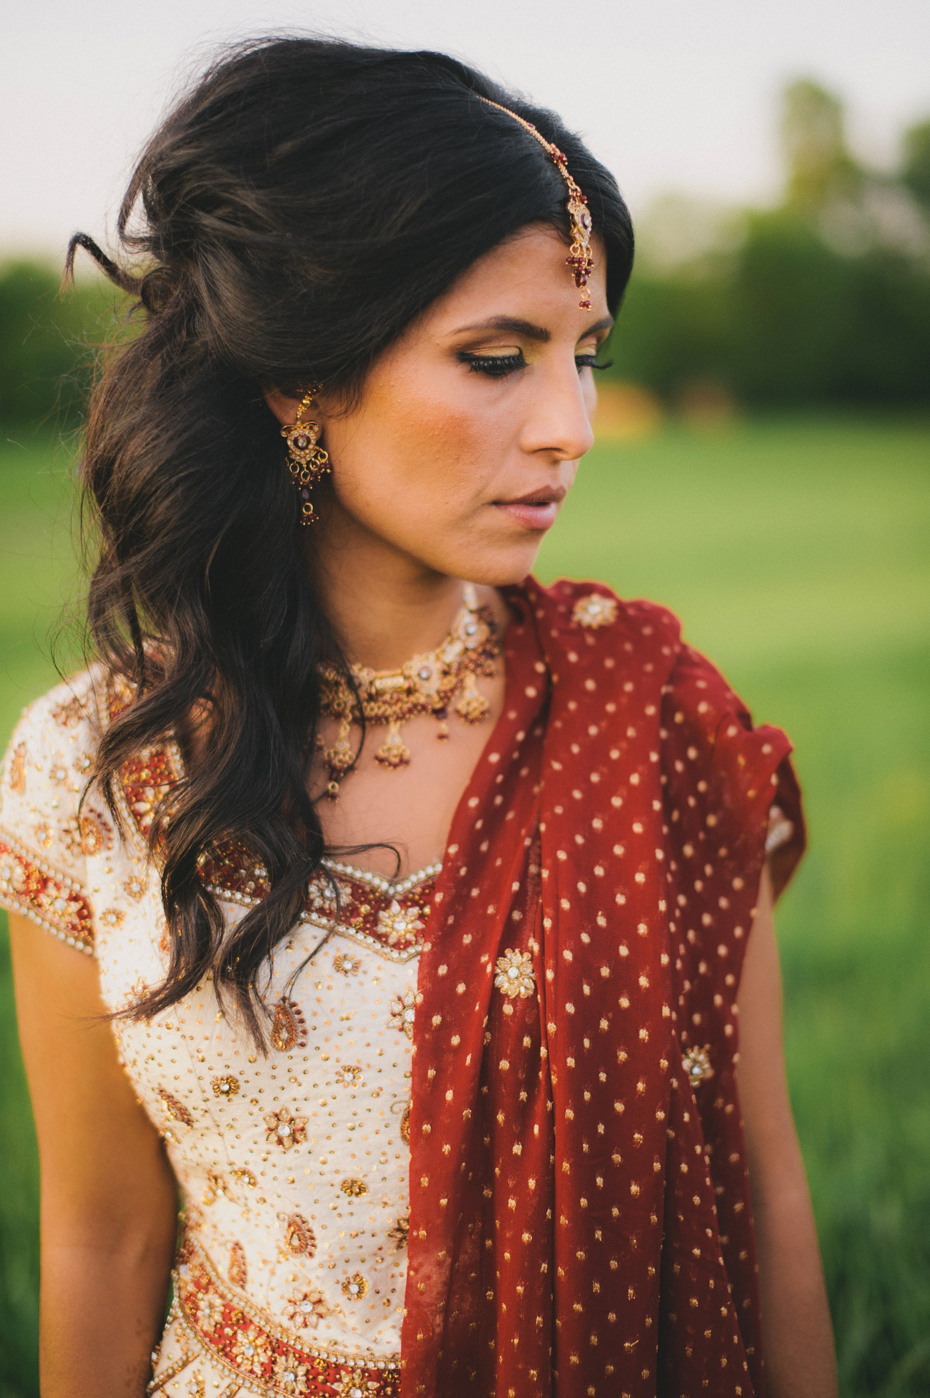 Portraits of a bride in traditional hindu wedding clothing, by Ann Arbor wedding photographer Heather Jowett.